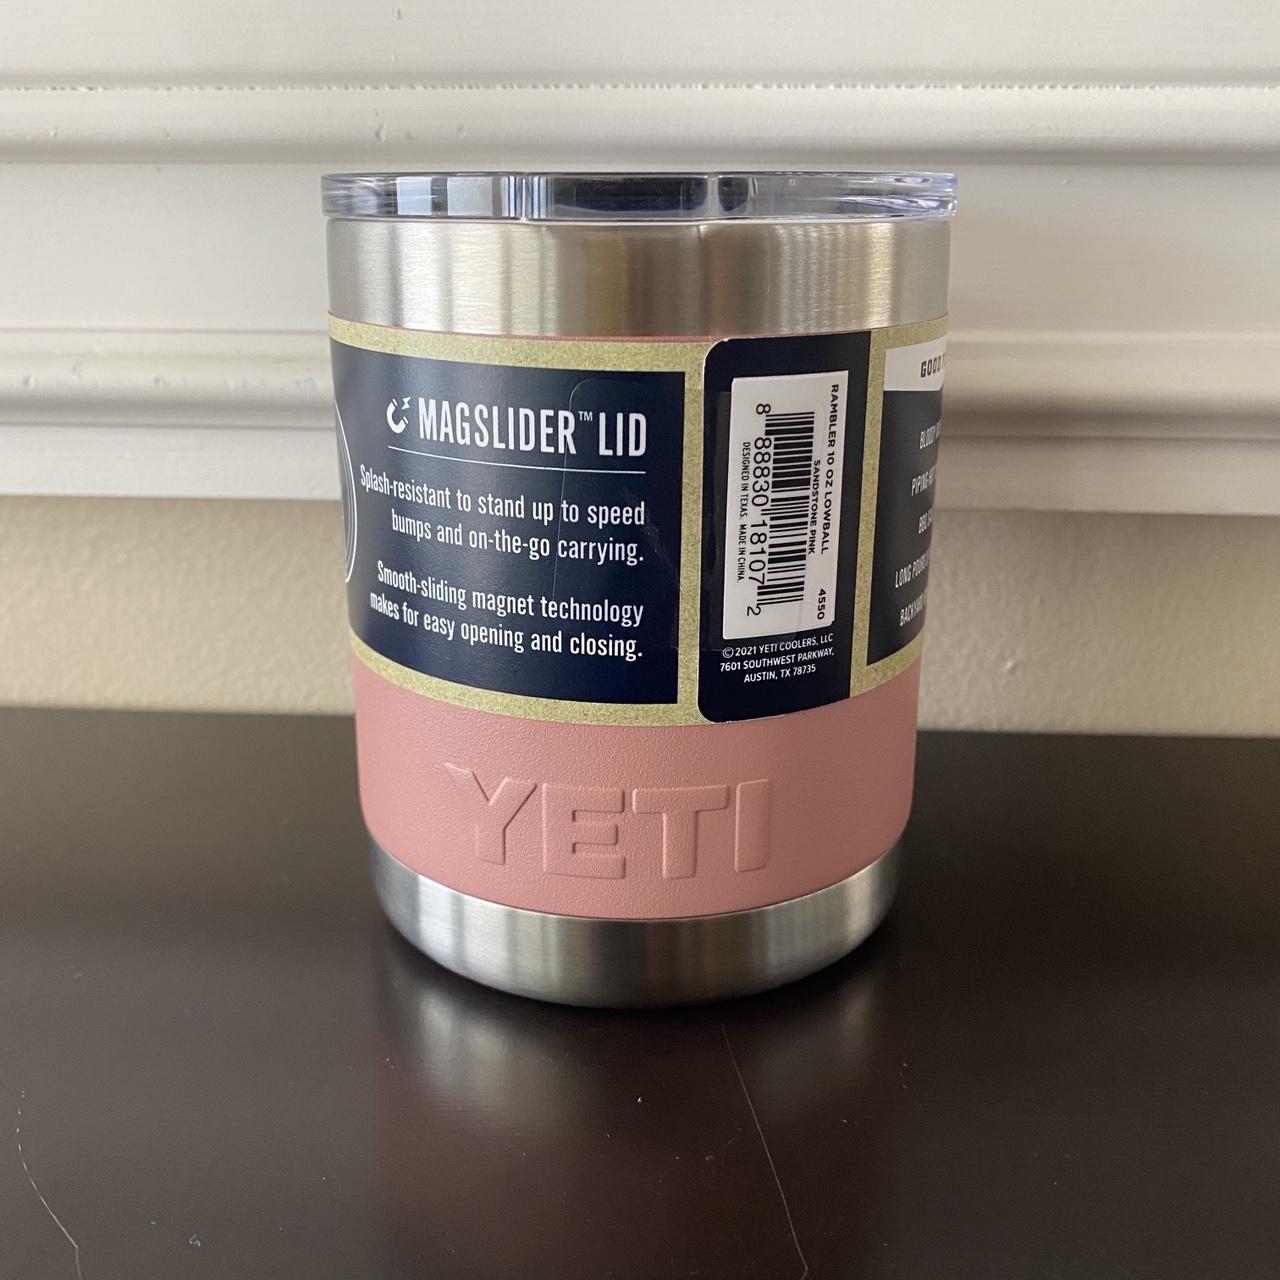 YETI - 10oz - Lowball - Sandstone Pink